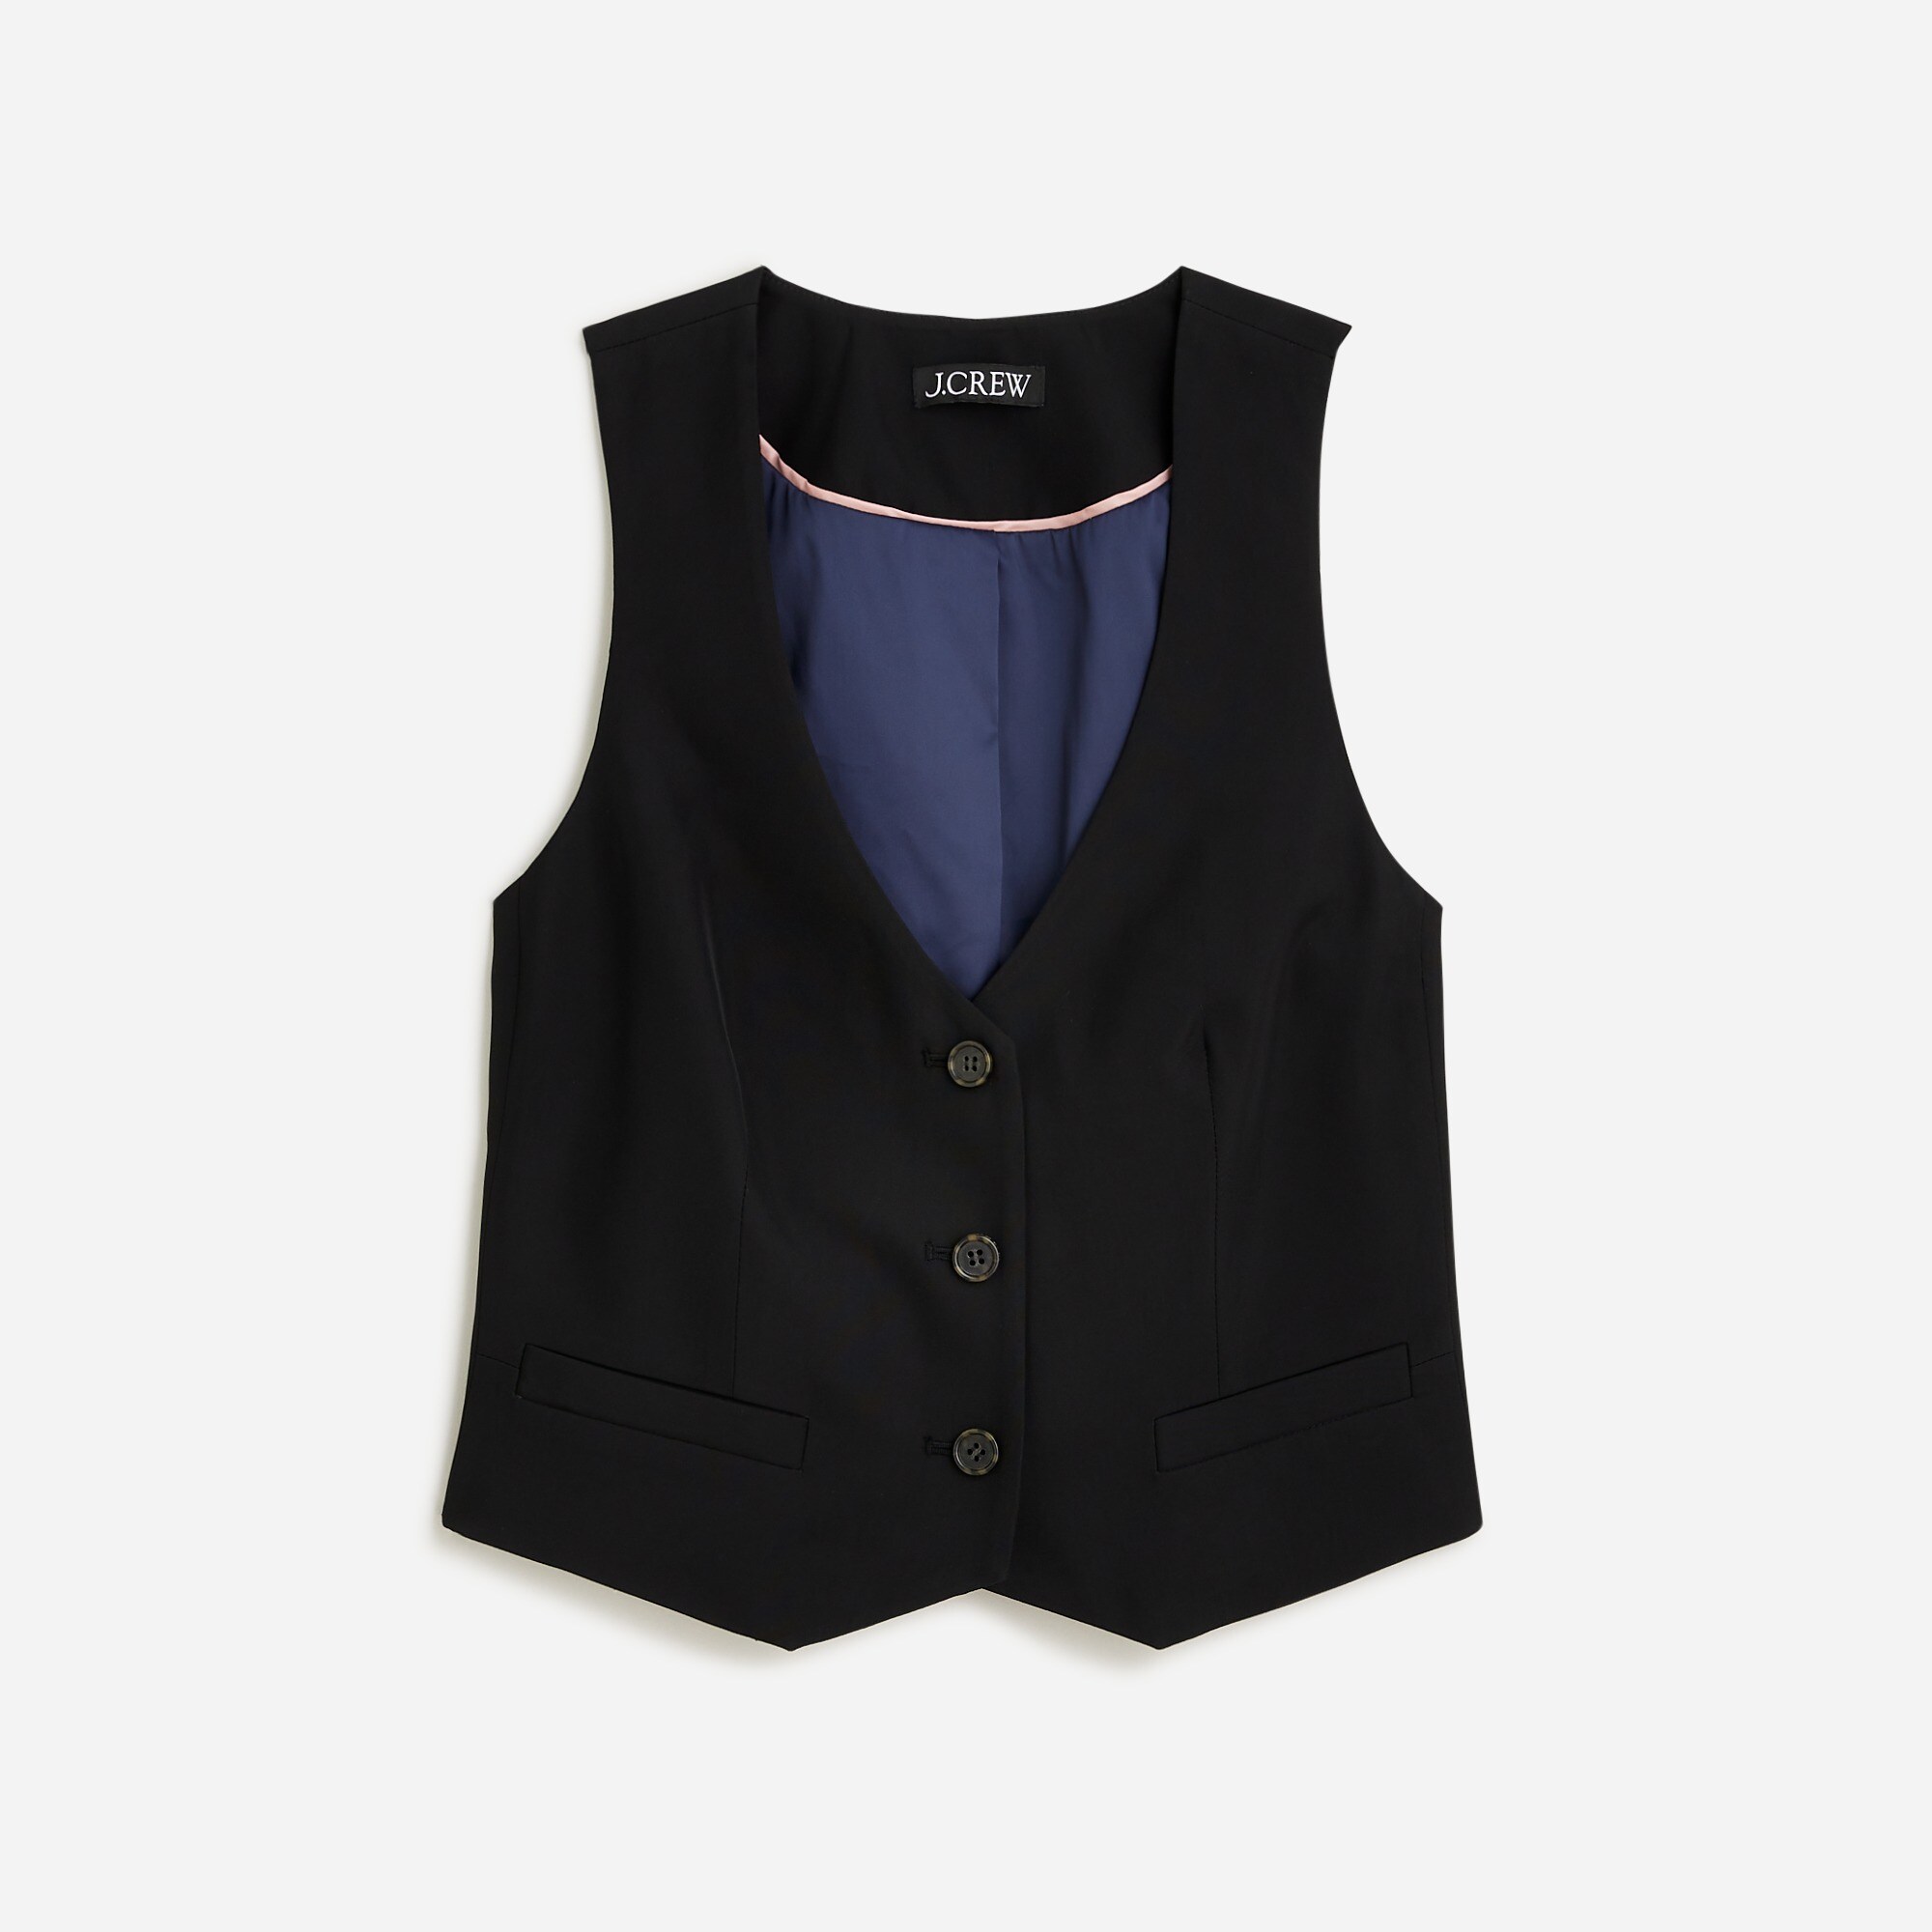  Slim-fit vest in drapey viscose